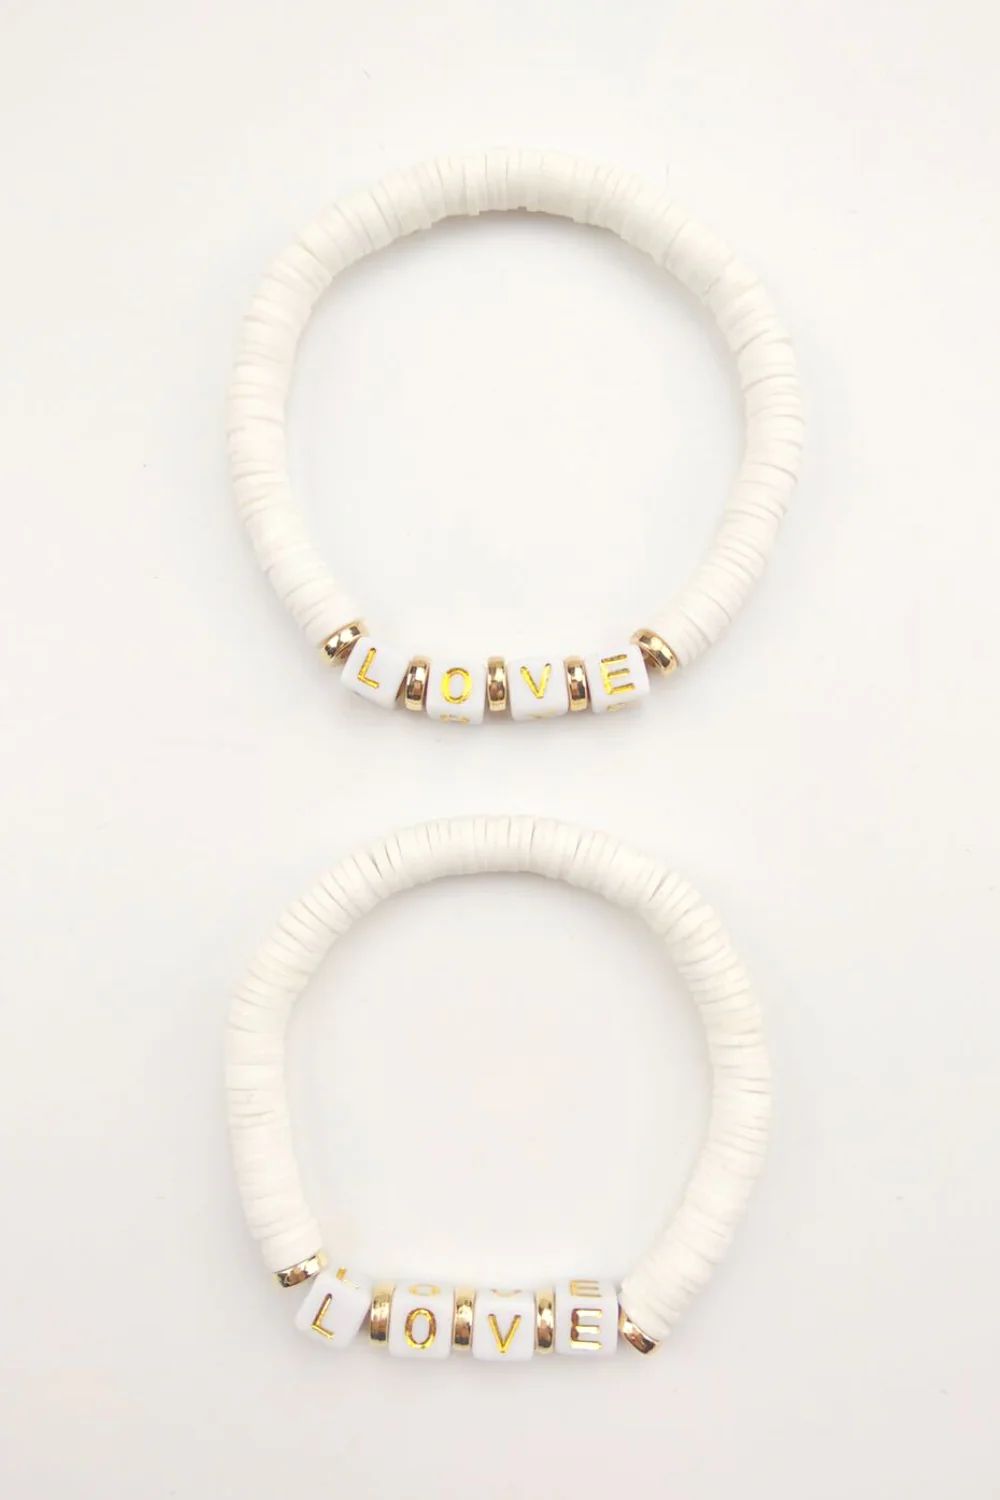 Krista + Kolly Horton: Beachy Keen Bracelet | The Styled Collection